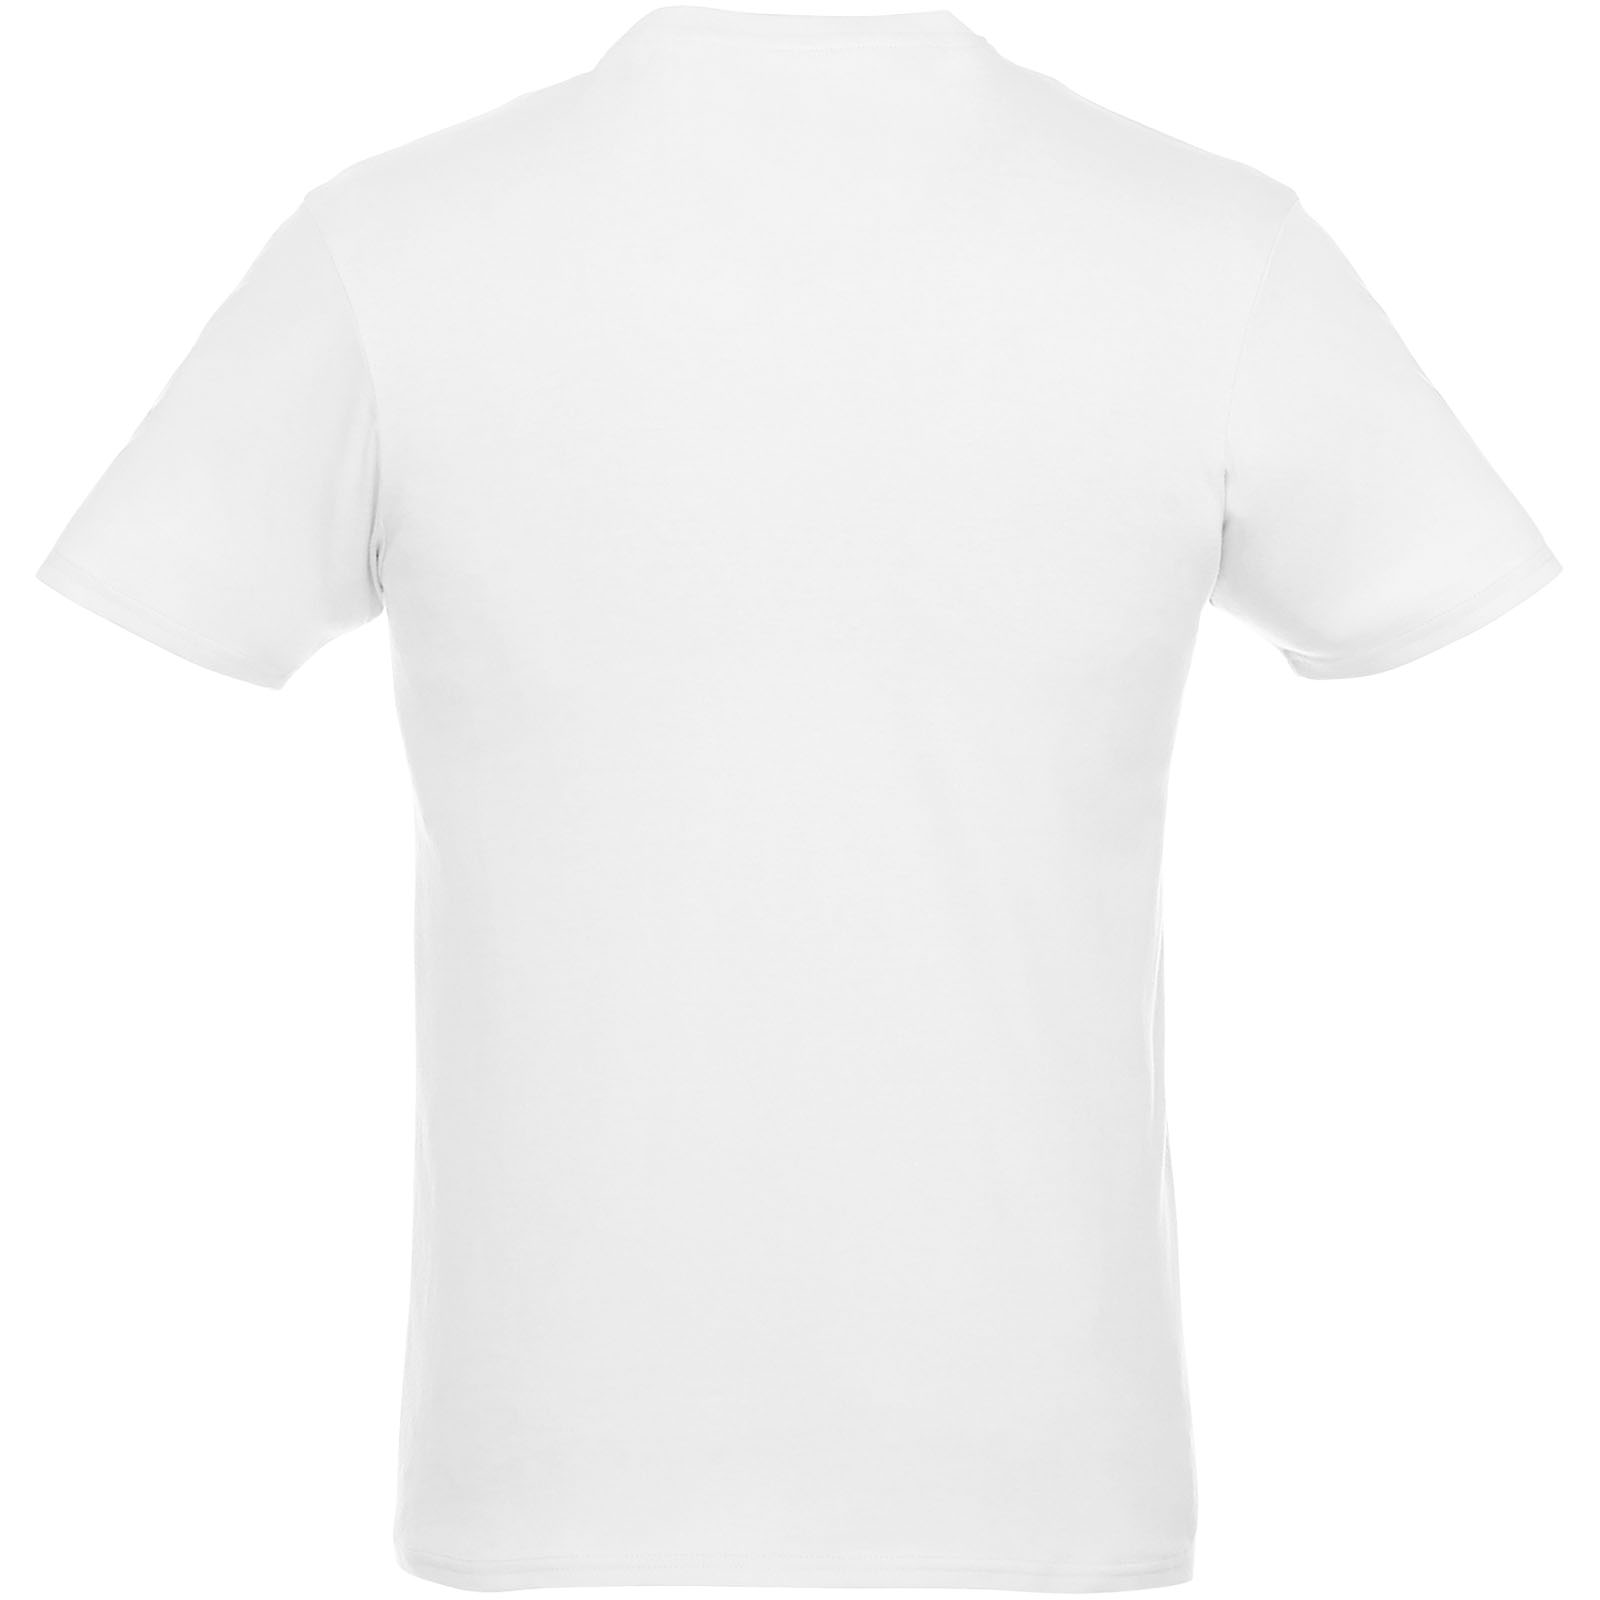 Advertising T-shirts - Heros short sleeve men's t-shirt - 2